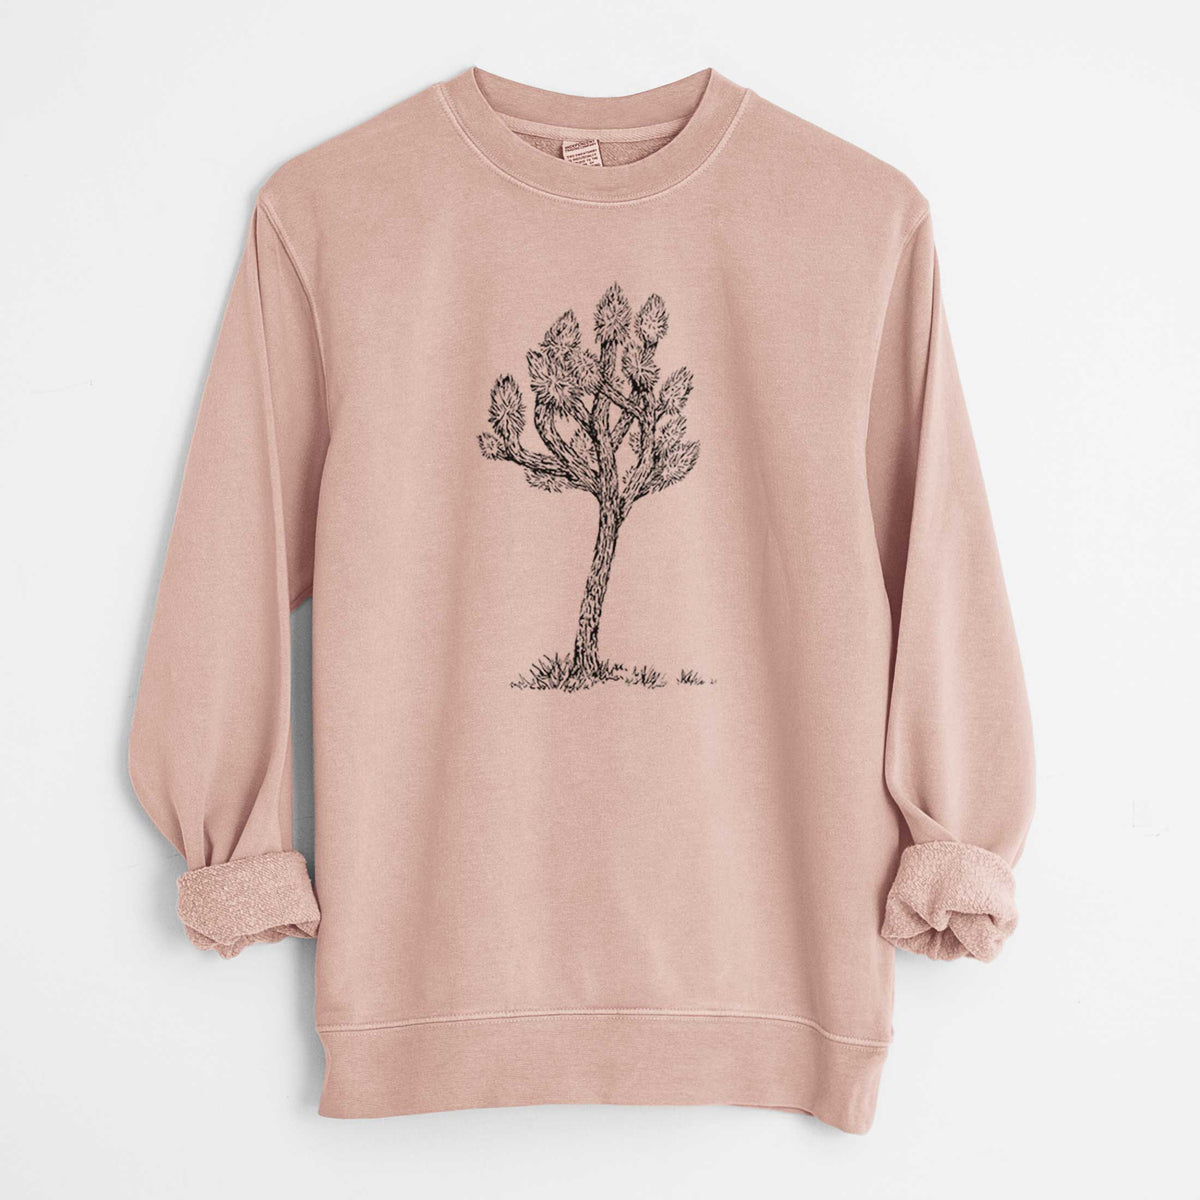 Yucca brevifolia - Joshua Tree - Unisex Pigment Dyed Crew Sweatshirt